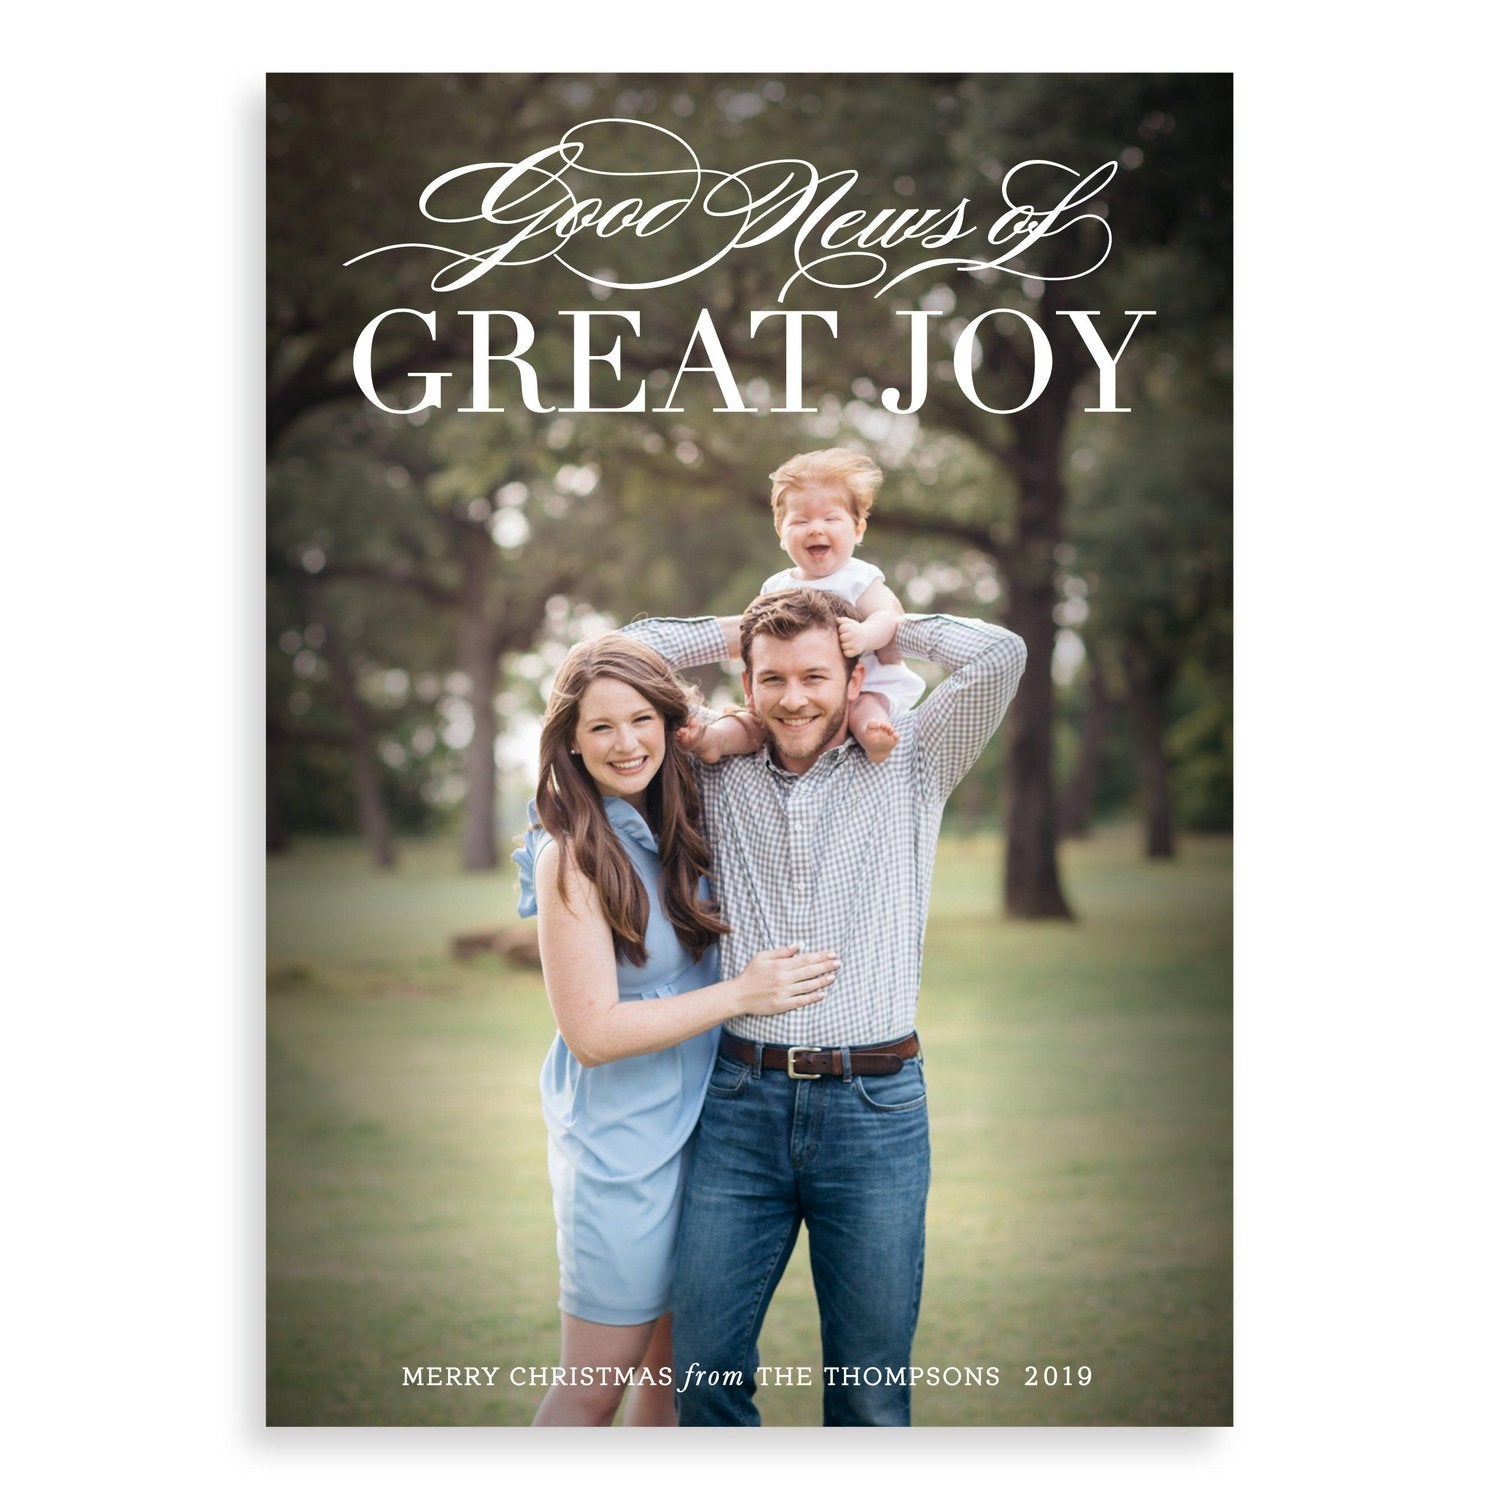 Good News of Great Joy Christmas Cards